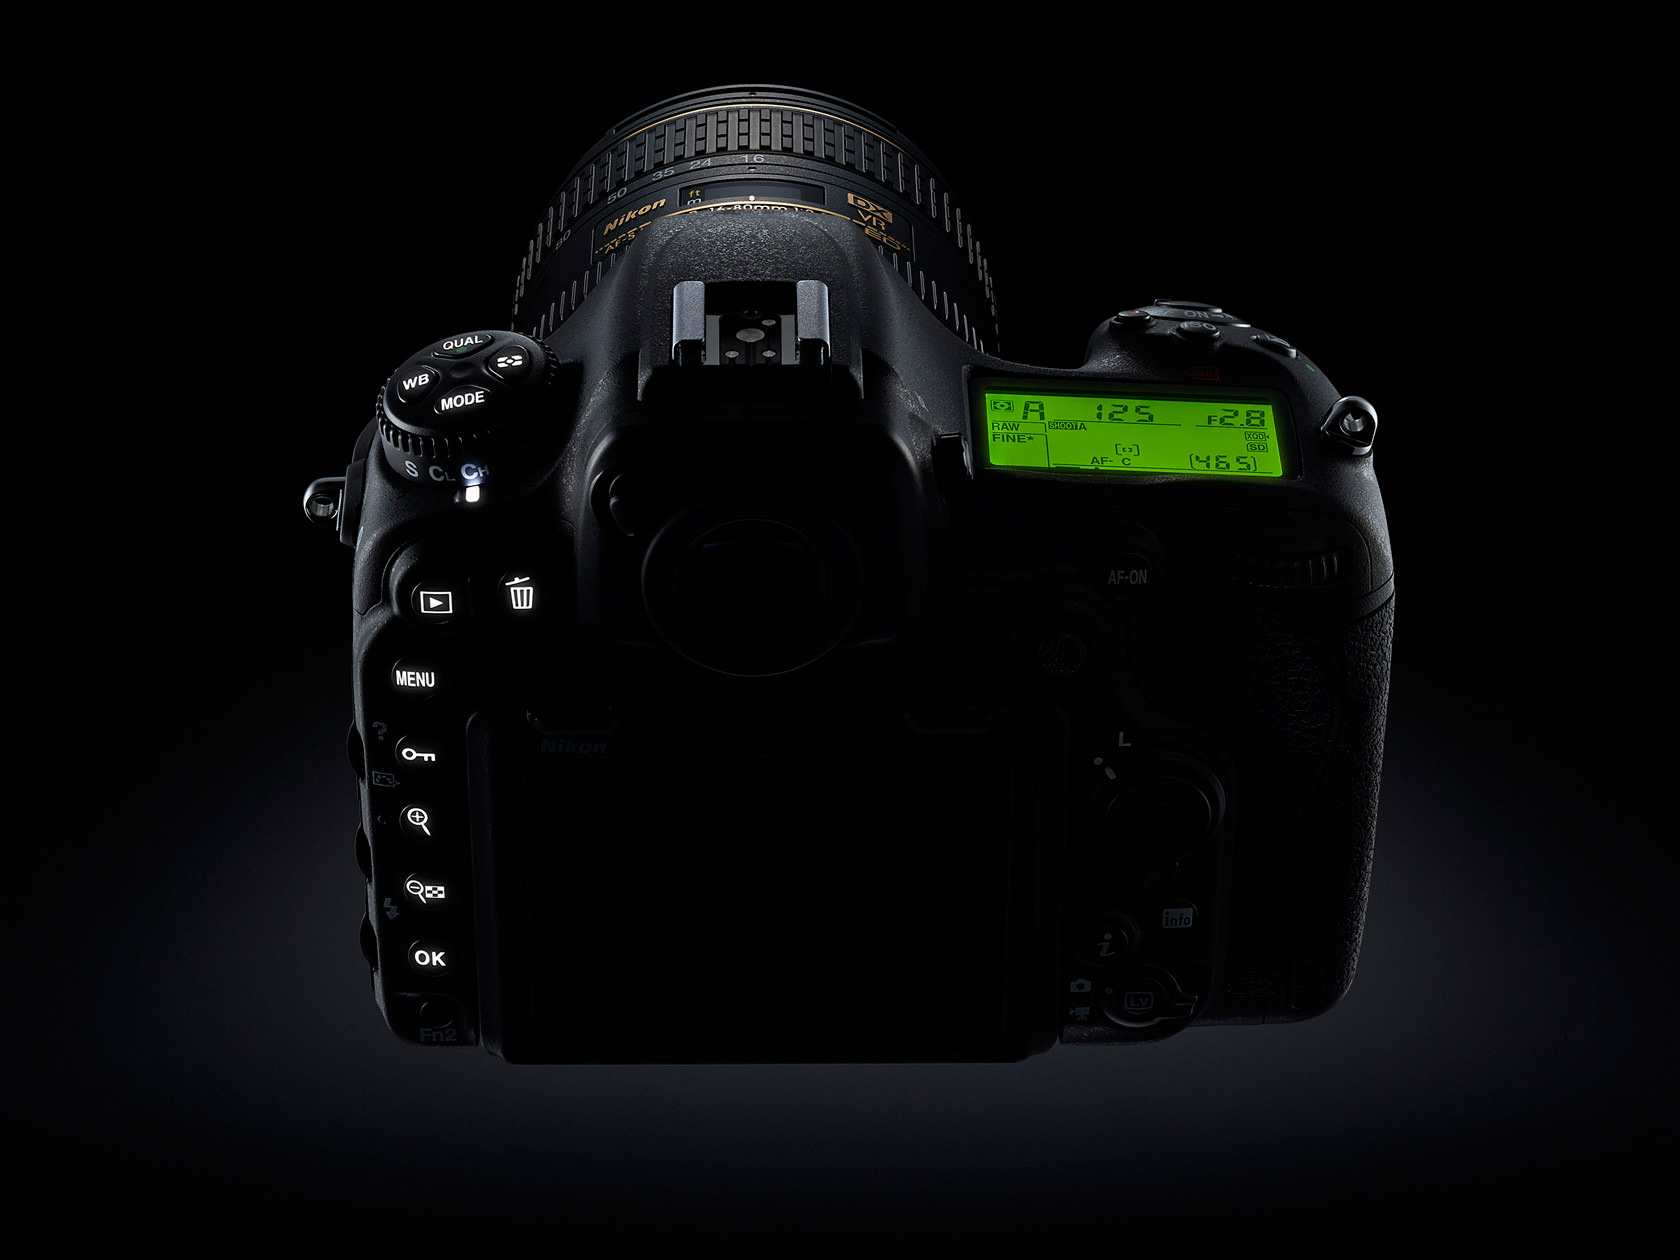 Nikon D500 Review - Ergonomics and AF Performance